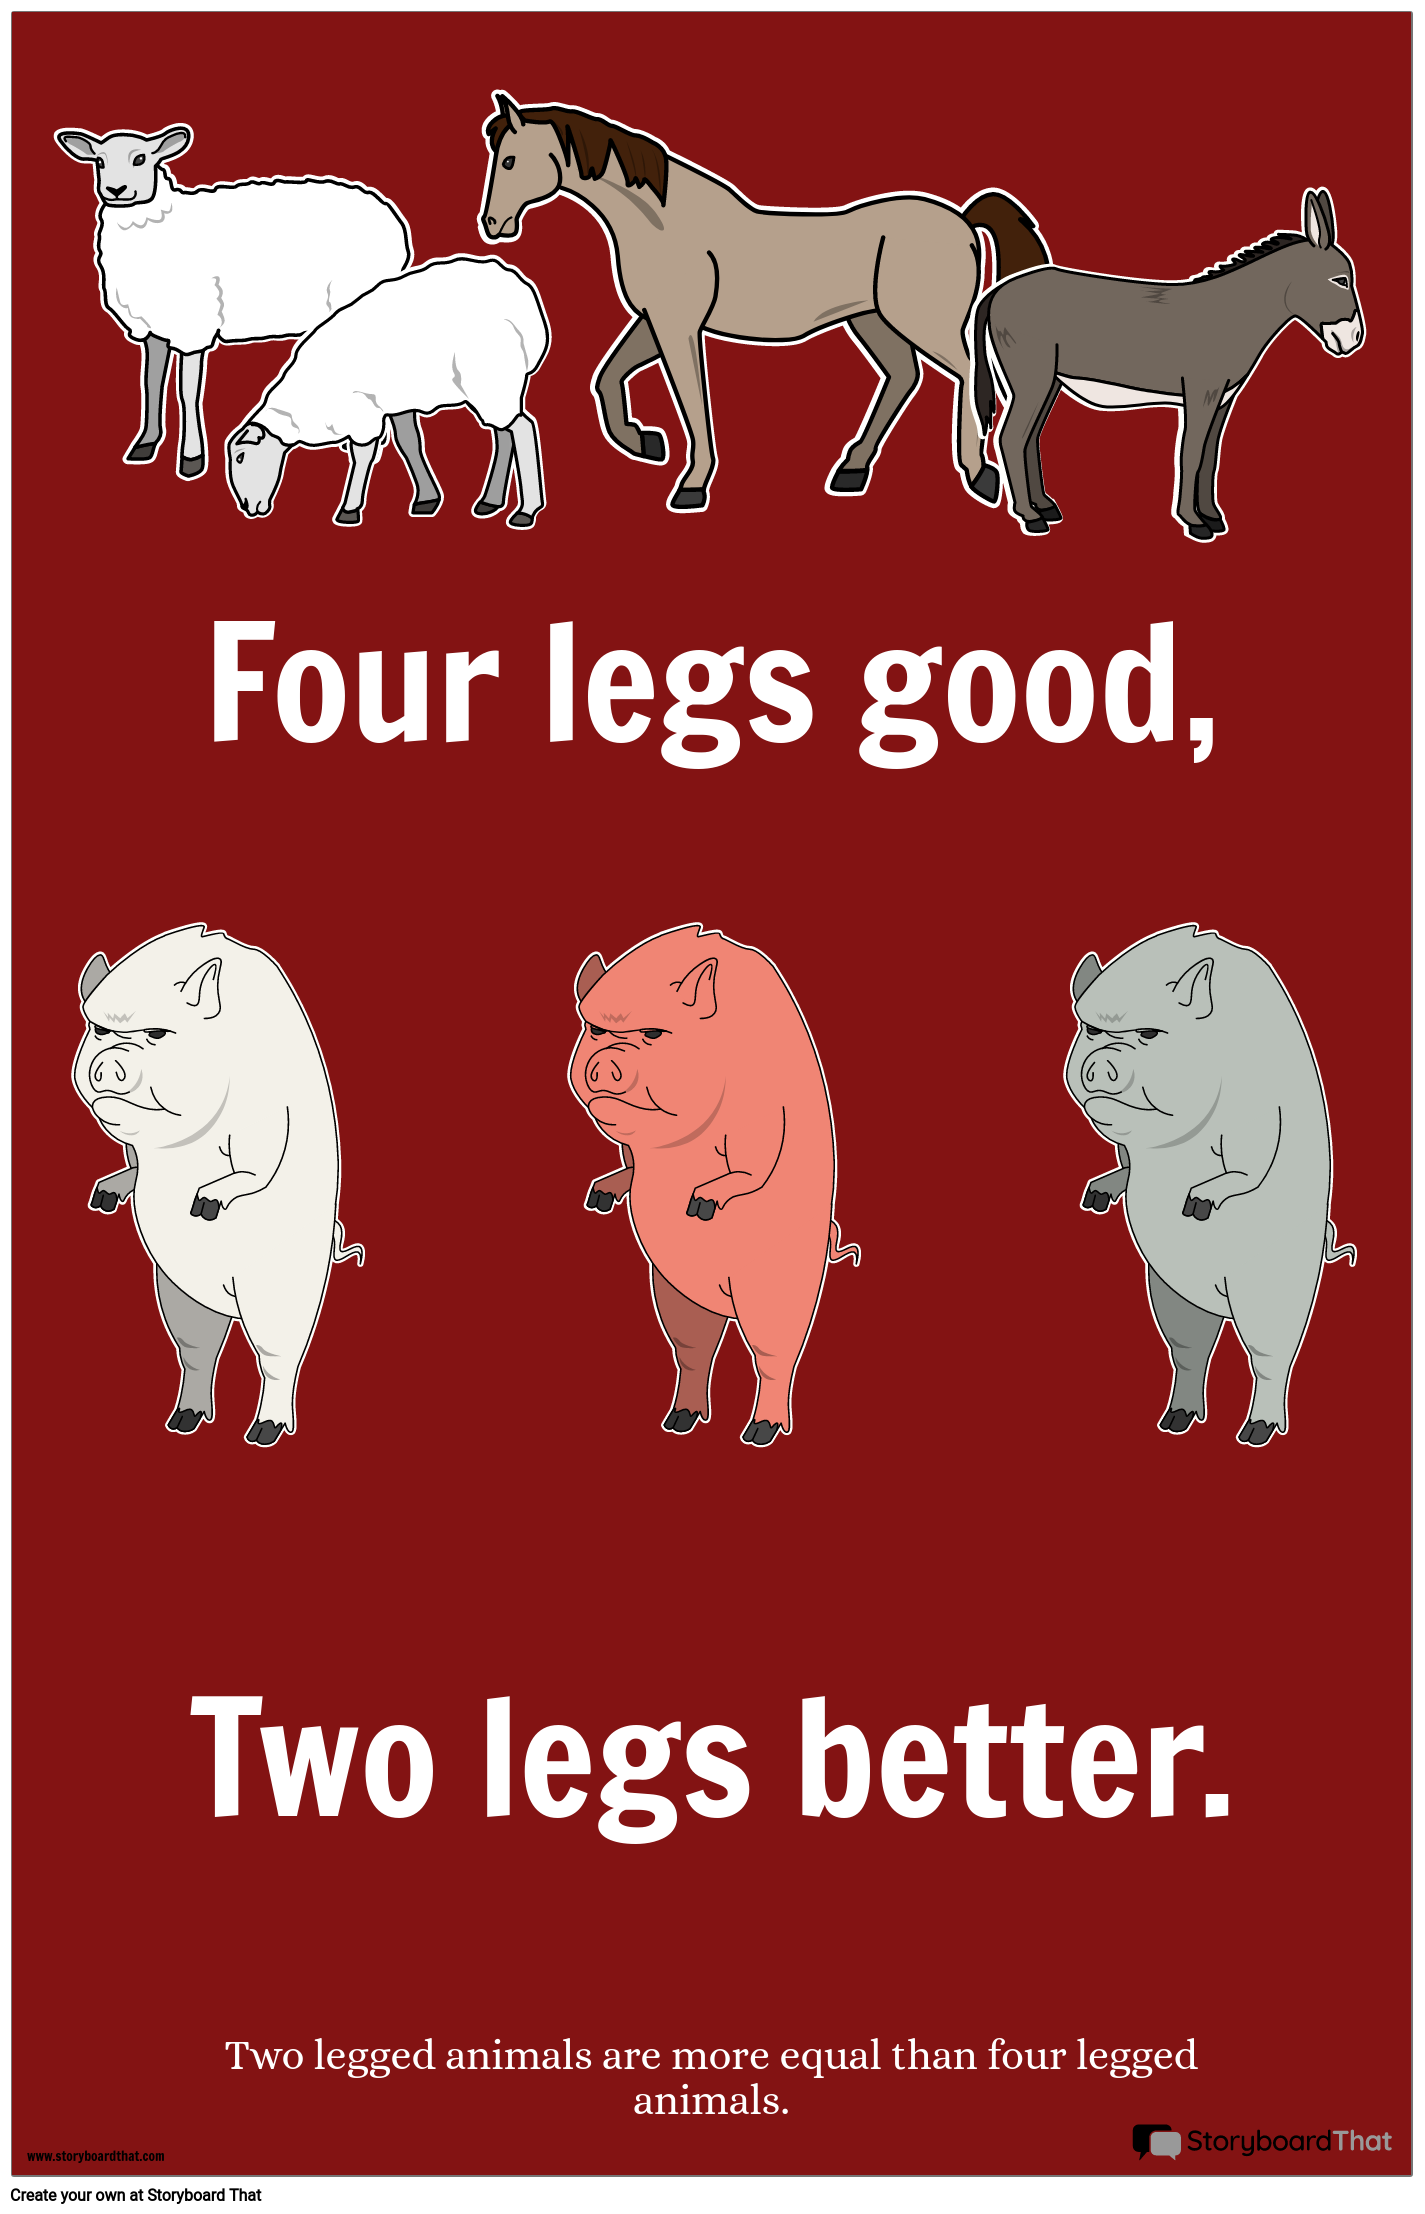 Animal Farm Propaganda Poster Example Storyboard